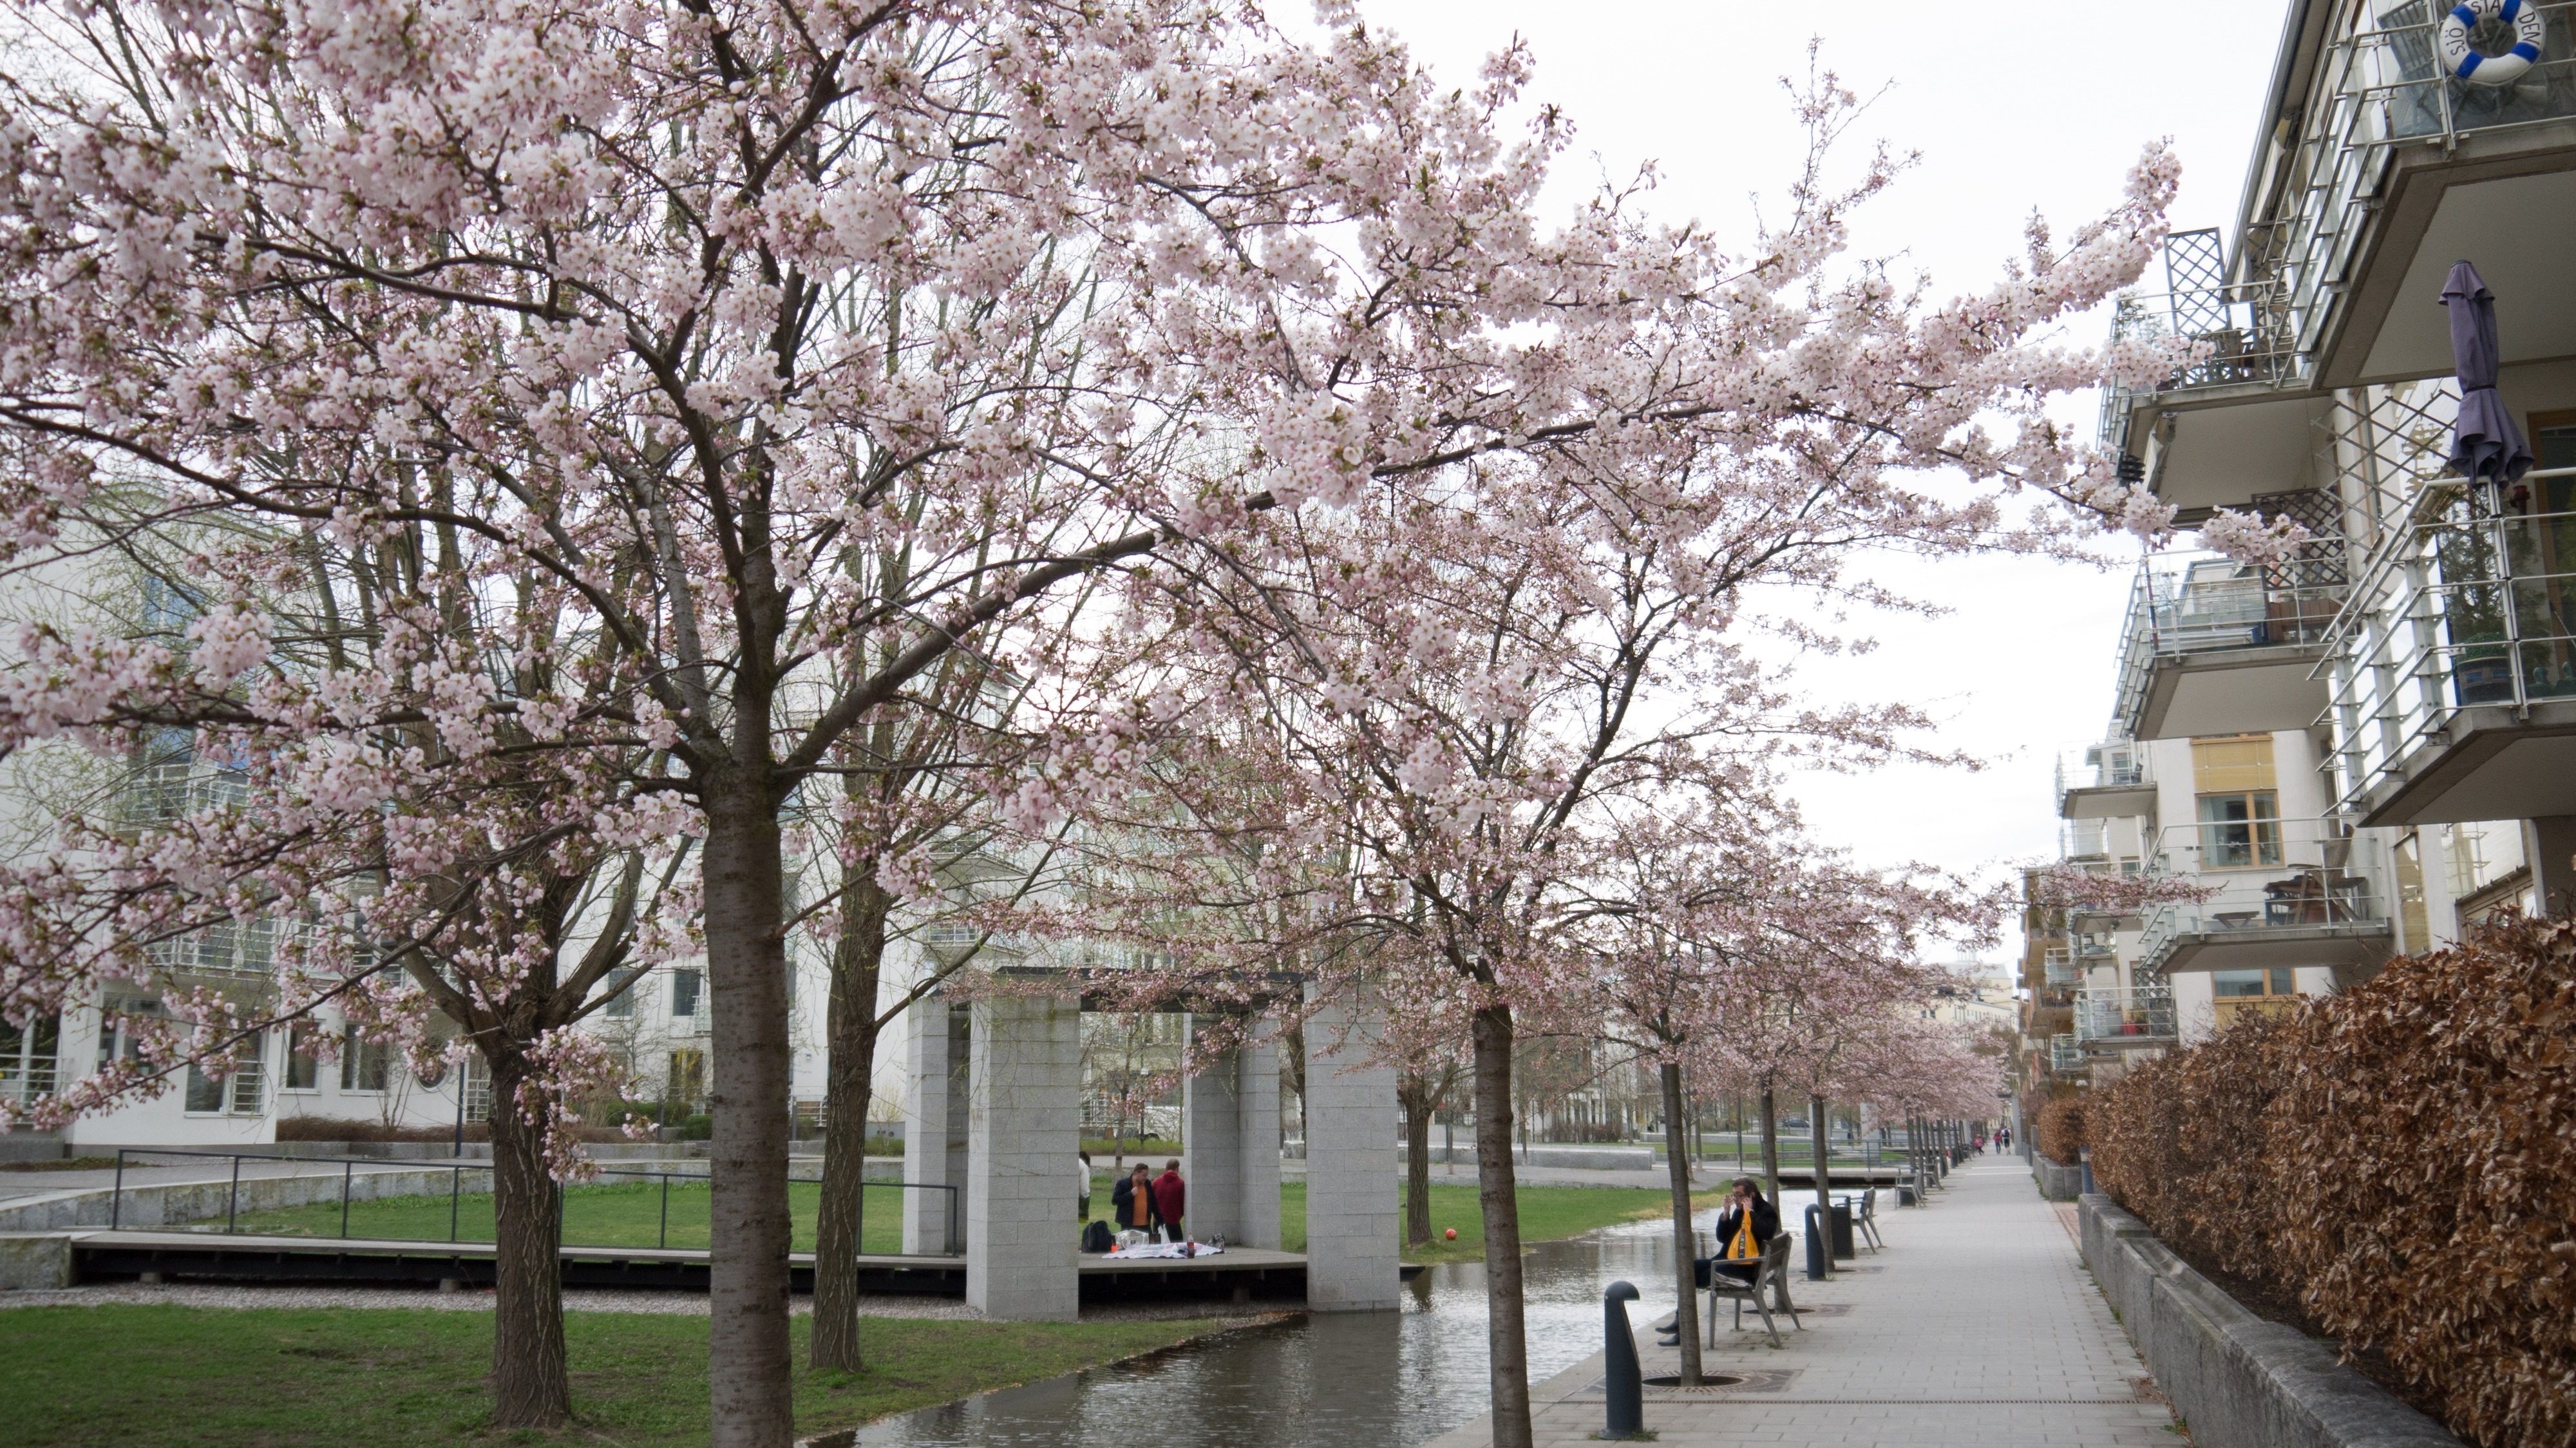 cherry blossom tree